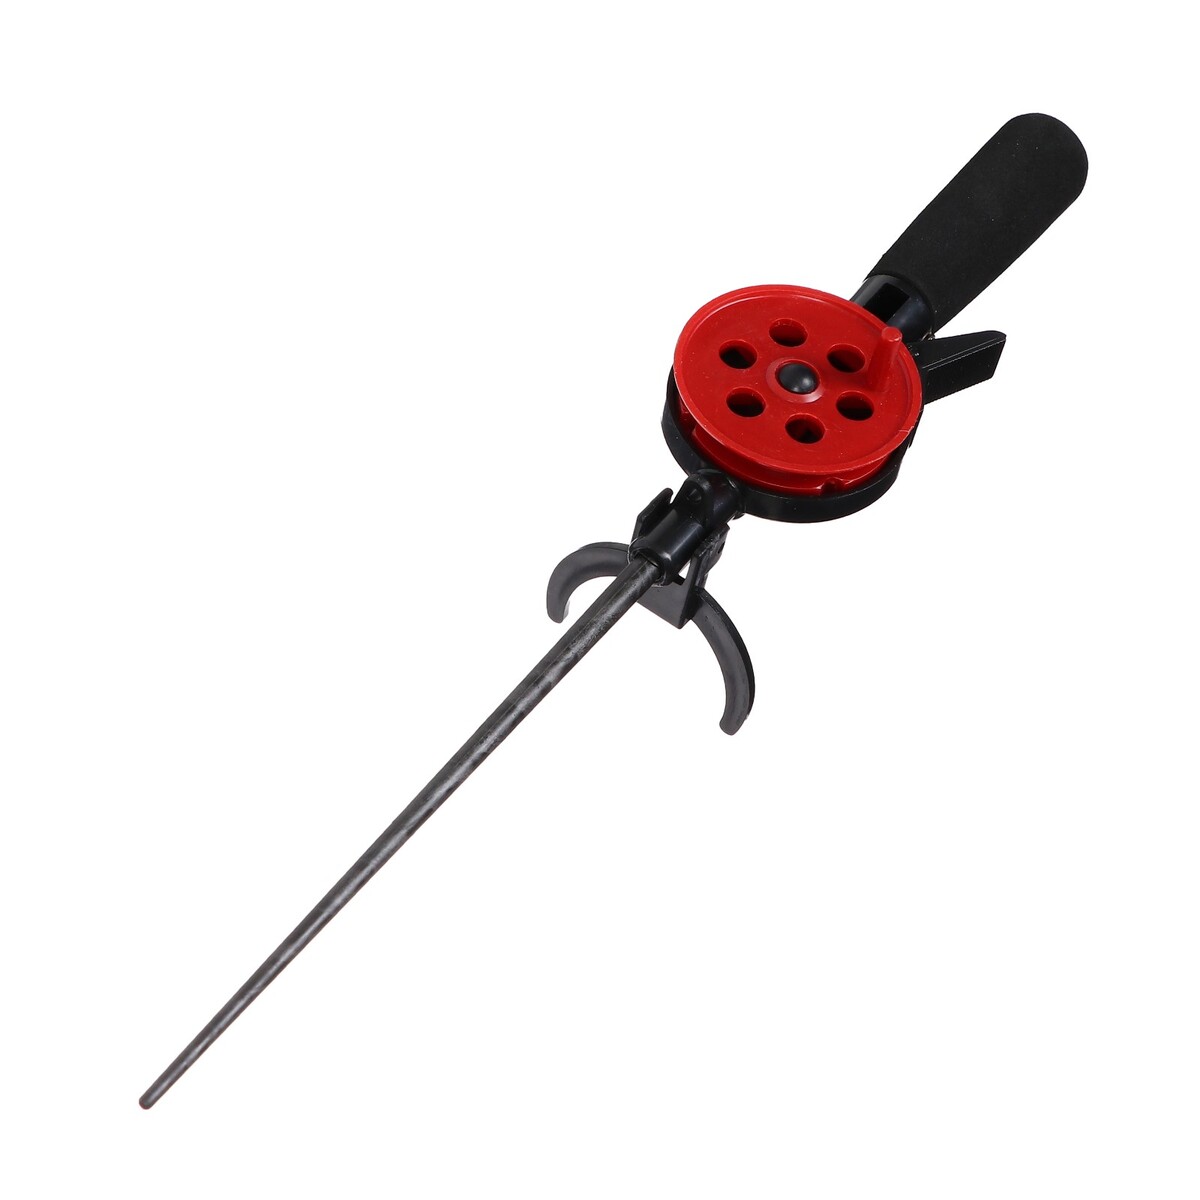 фото Удочка зимняя, ручка неопрен, диаметр катушки 5.5 см, катушка красная, hfb-5 no brand